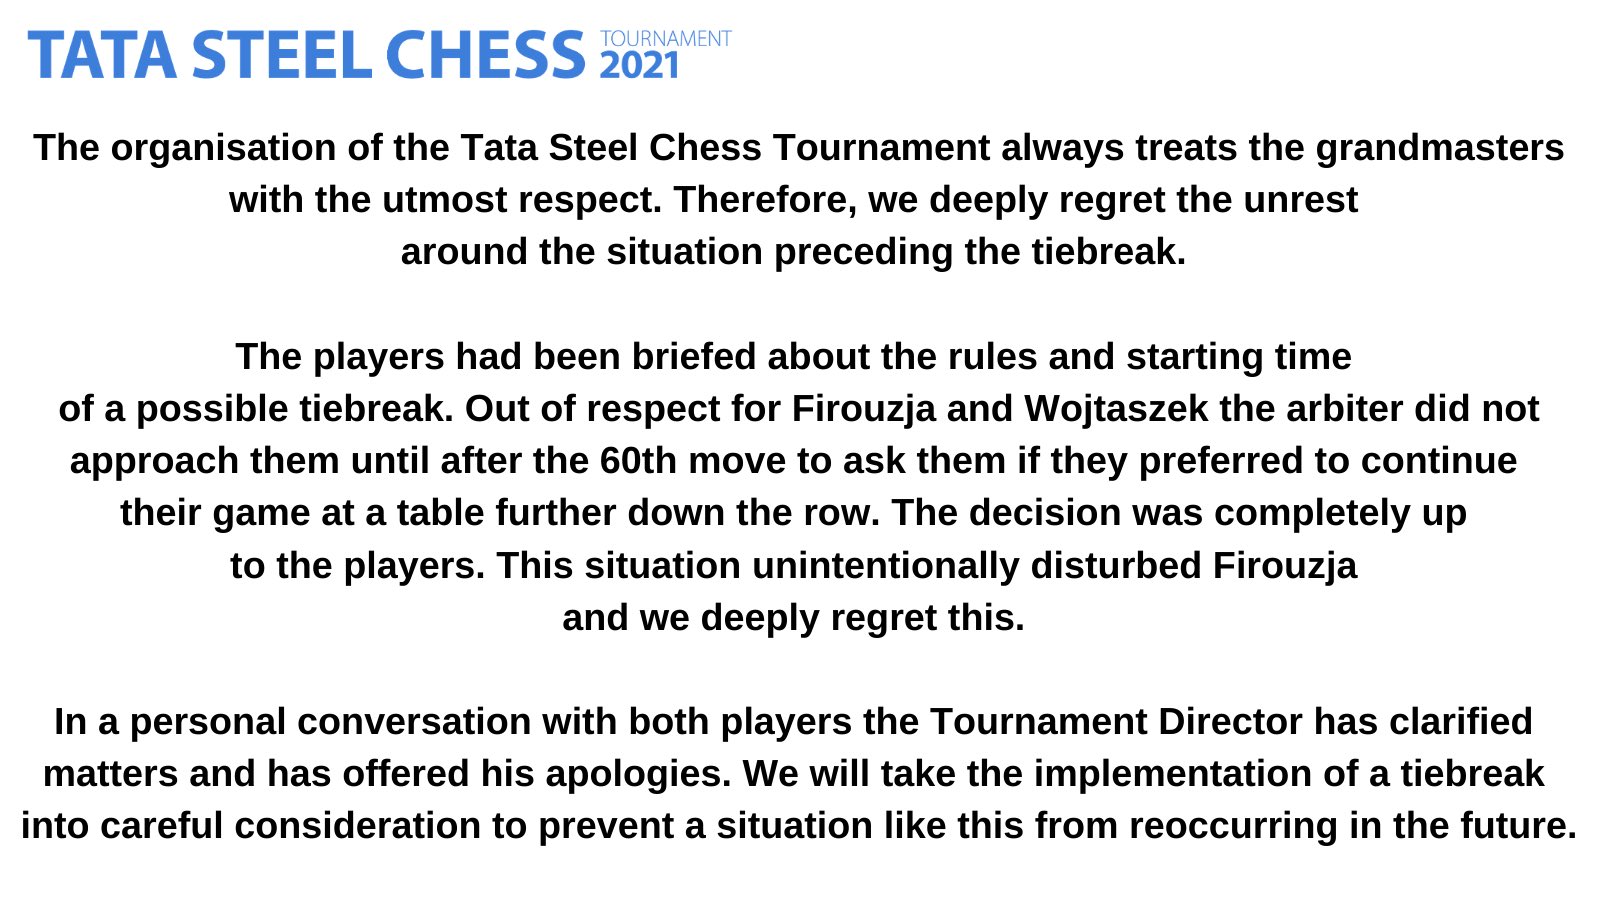 Tata Steel Chess Tournament Issues Statement On Firouzja